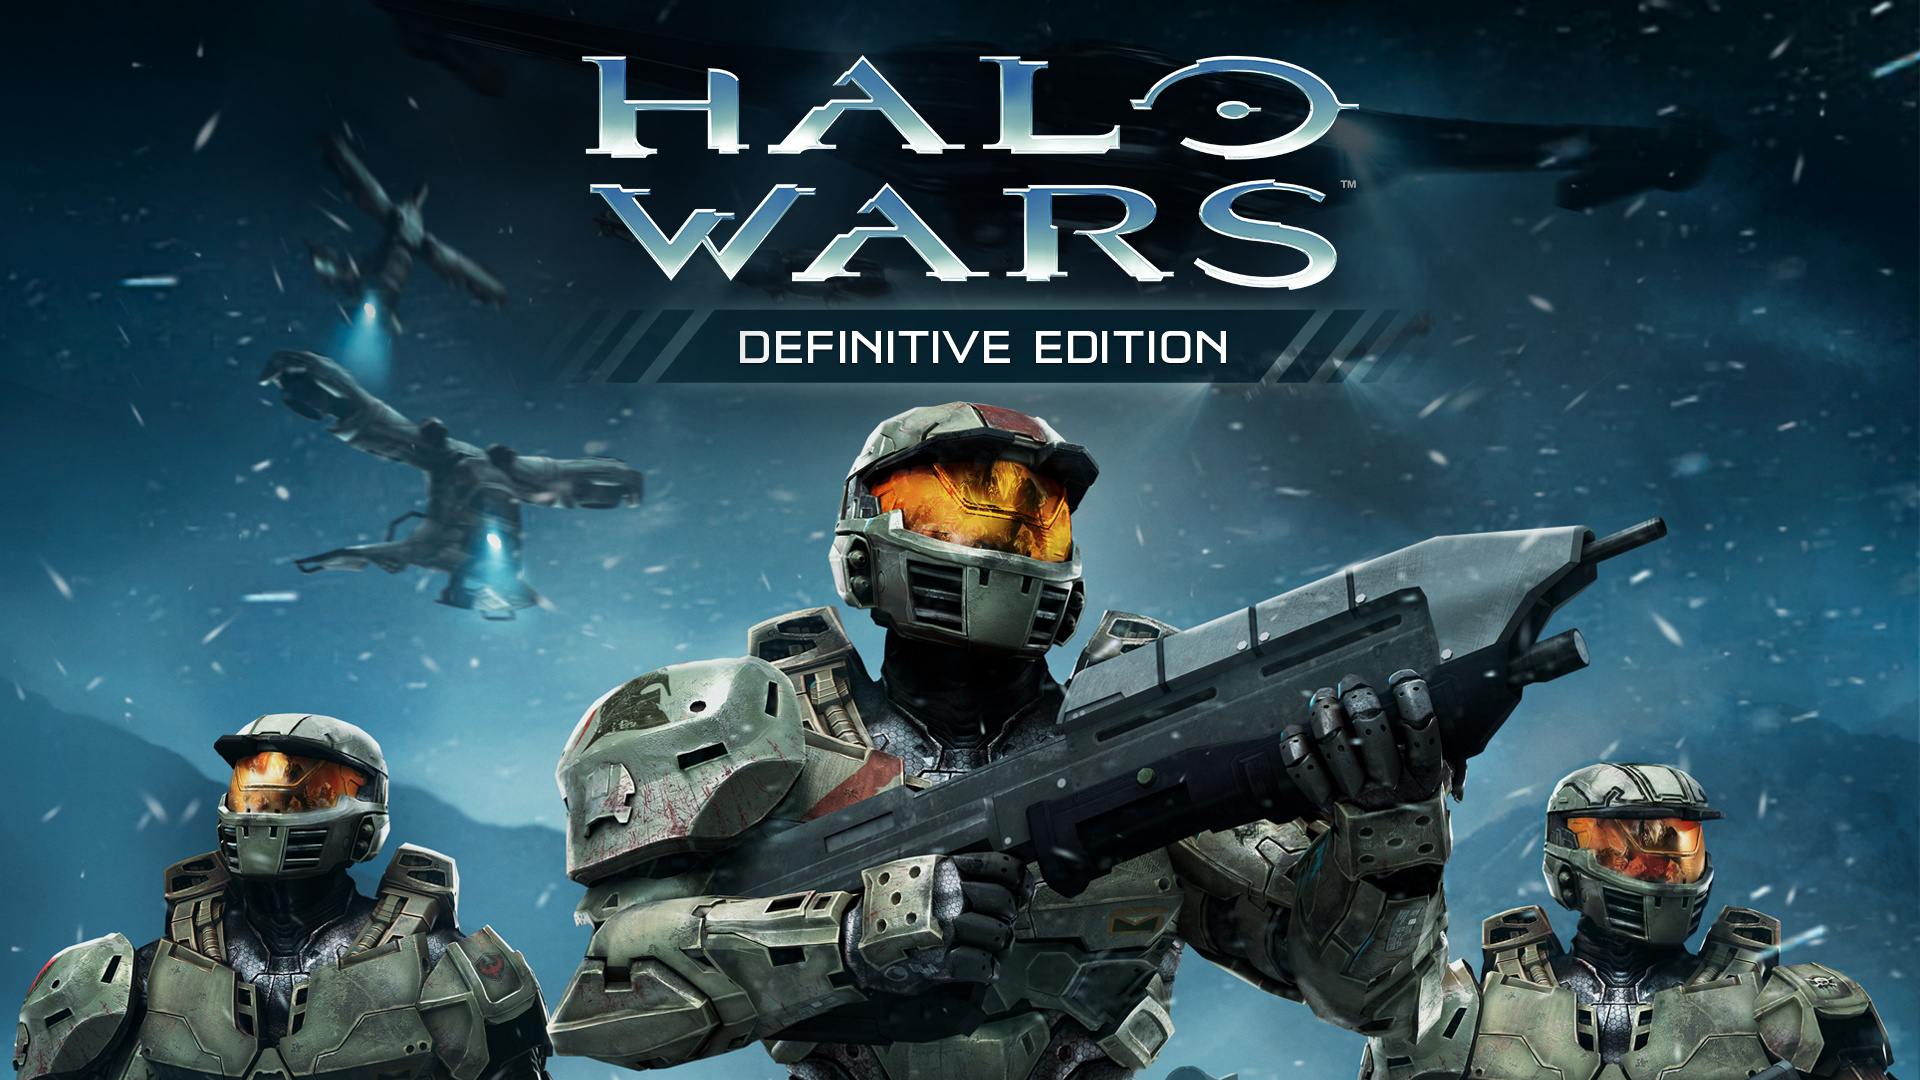 Halo Wars, Game wallpapers, HQ images, 4k resolution, 1920x1080 Full HD Desktop